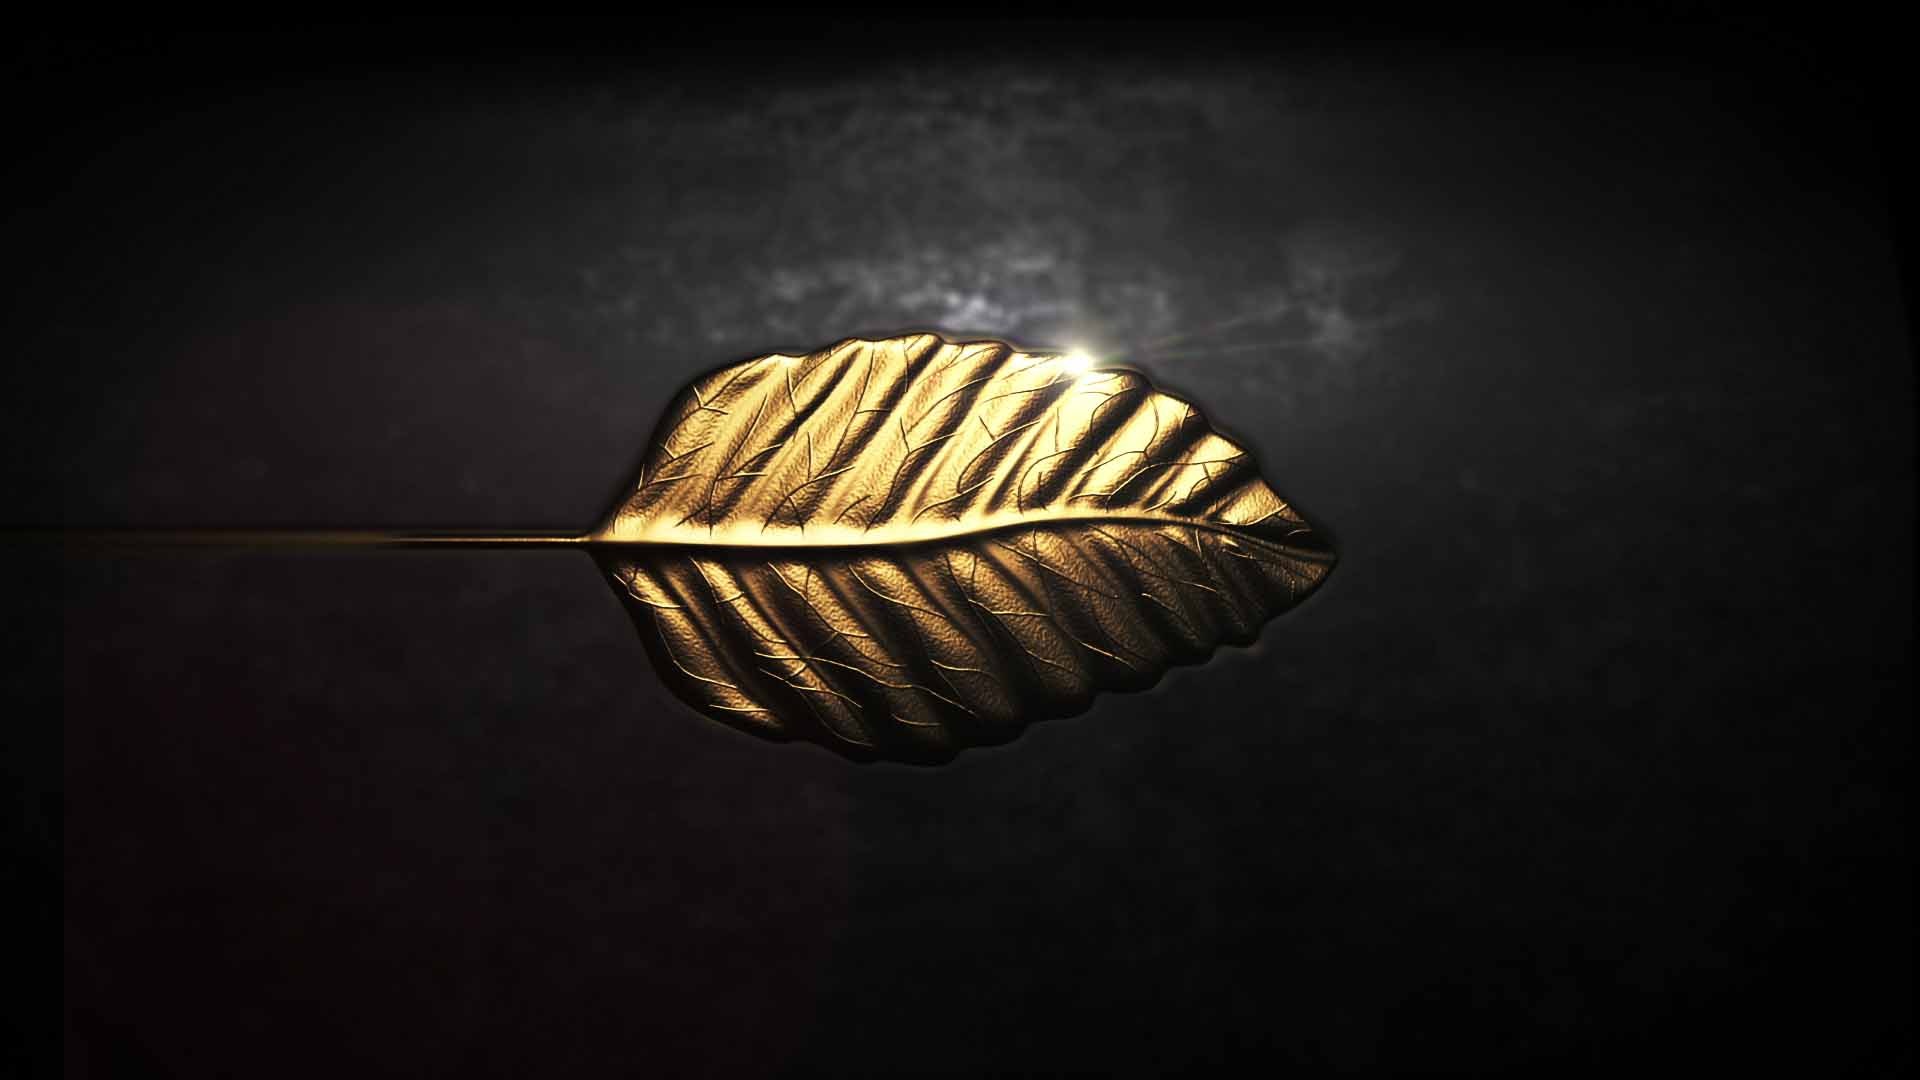 A CG golden leaf